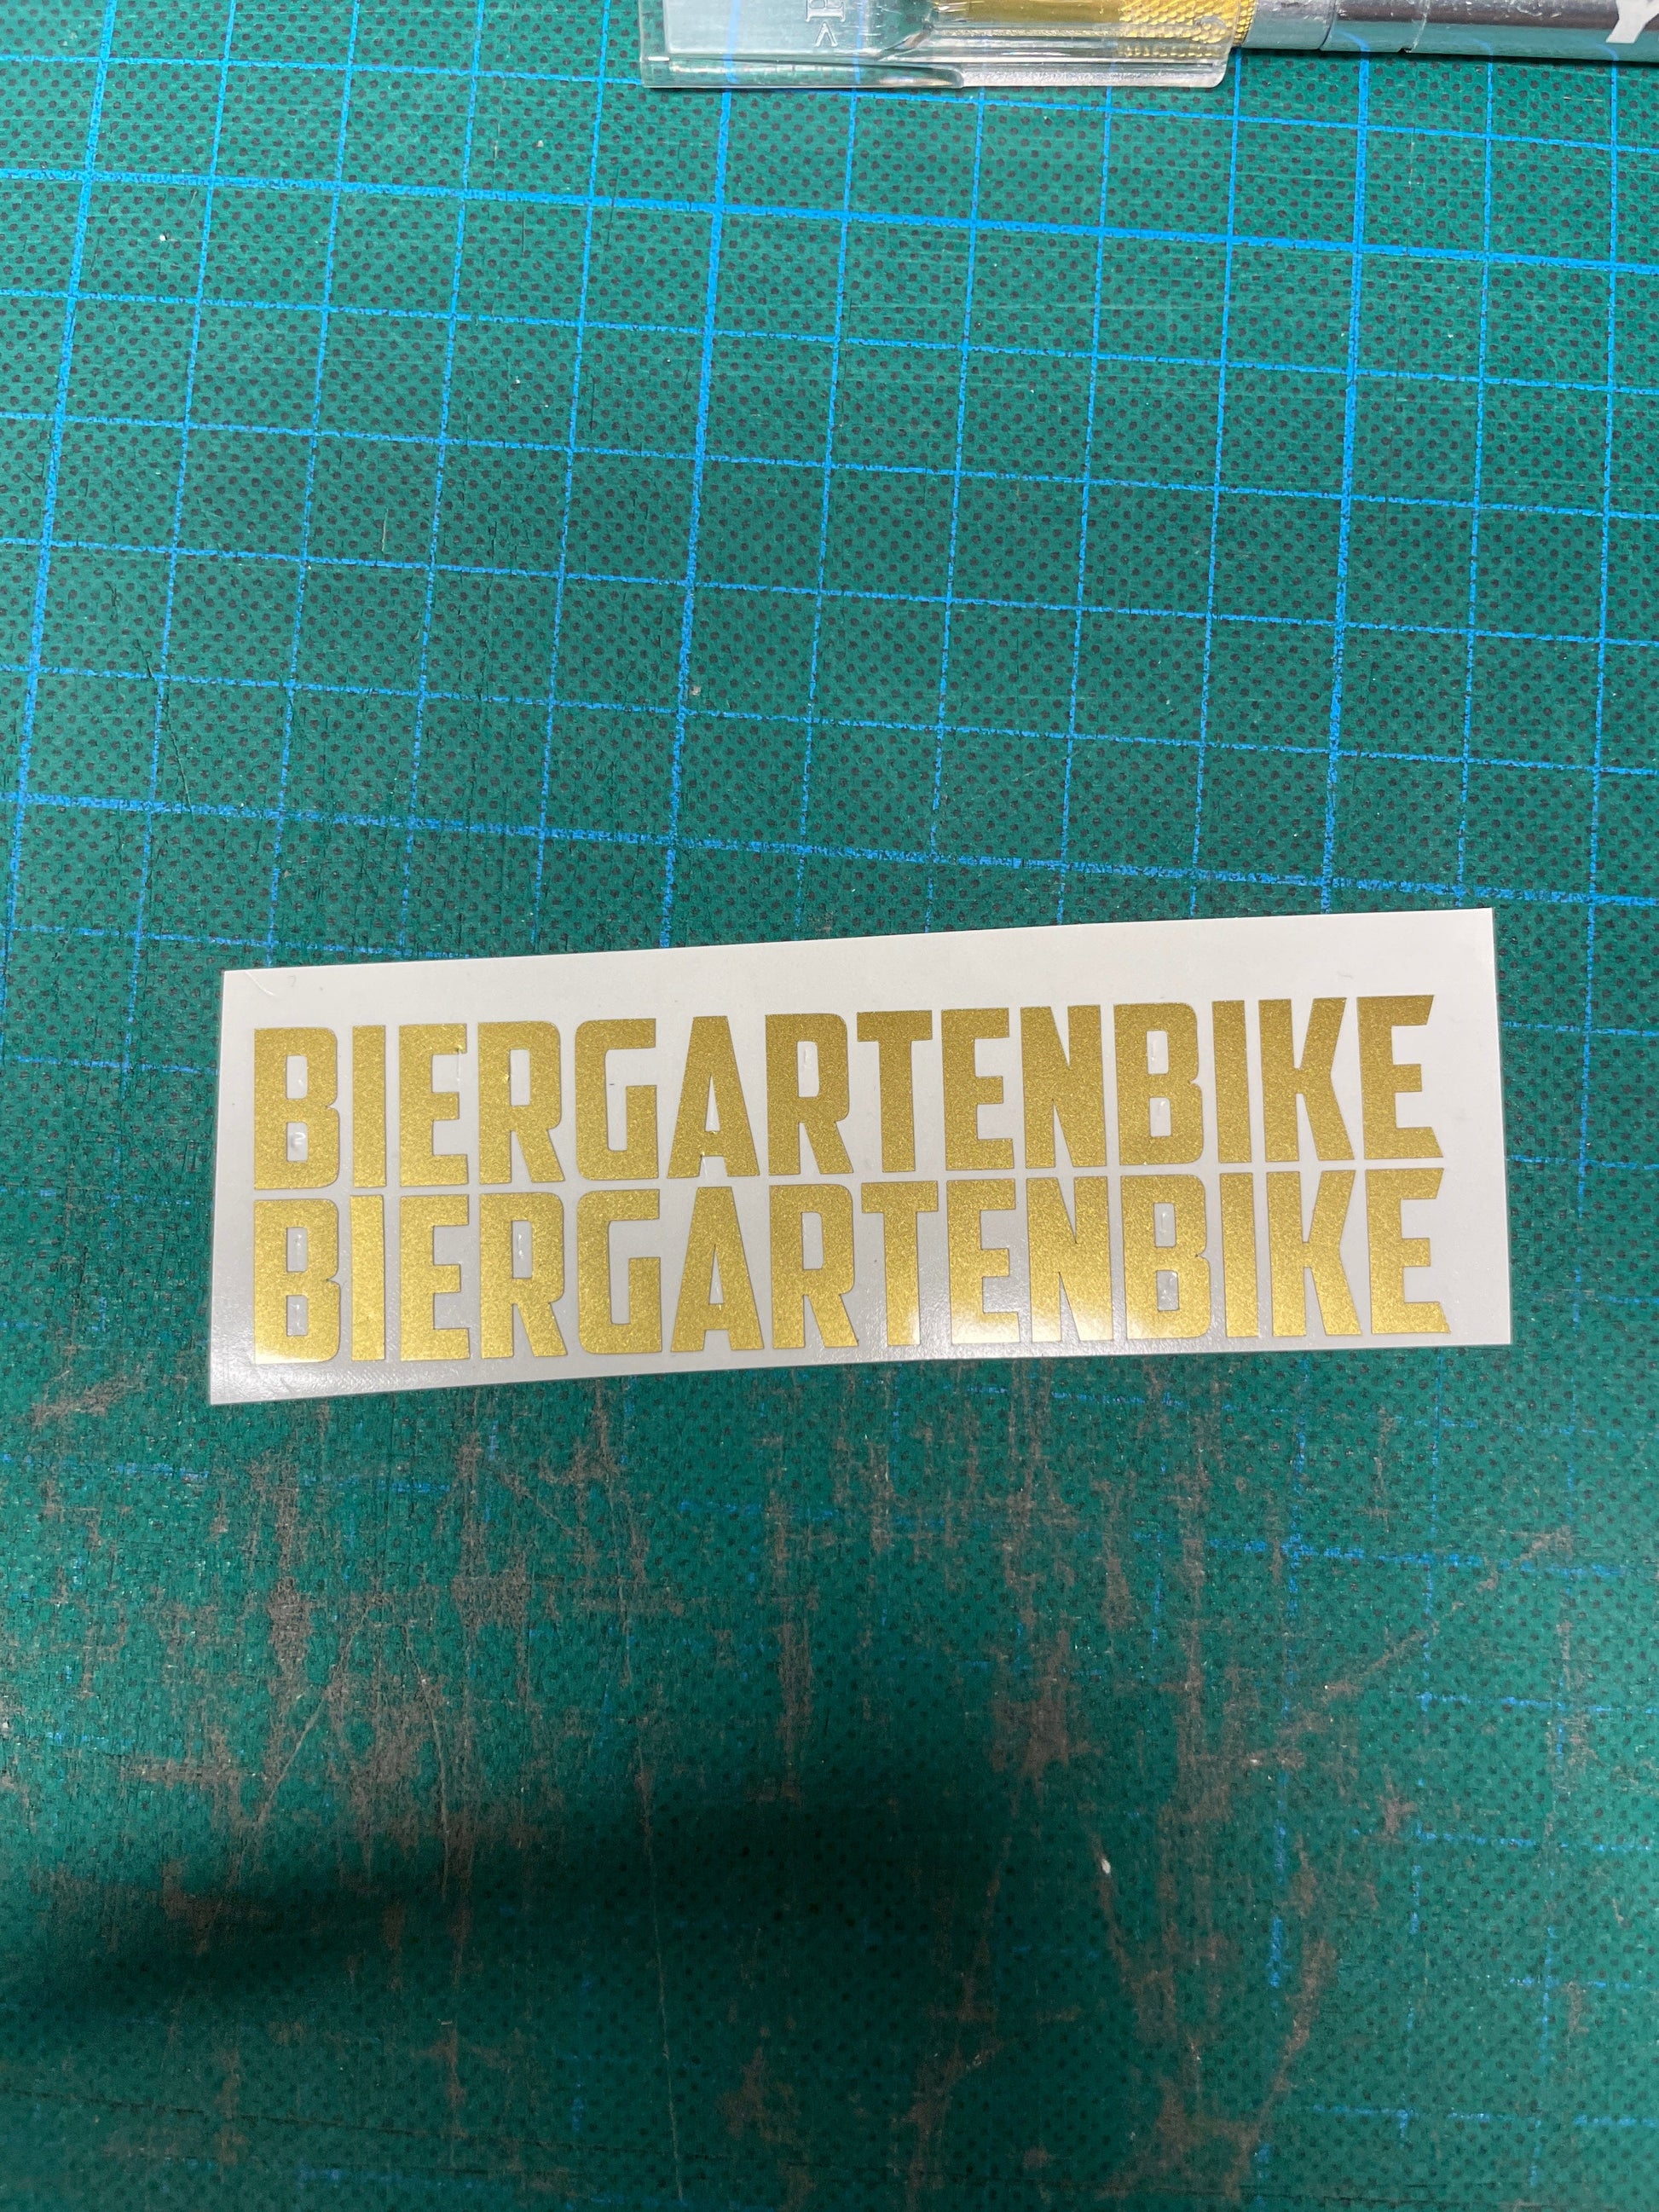 Sons of Battery - E-MTB Brand & Community Folien Gold / Biergartenbike EISDIELENBIKE / BIERGARTENBIKE E-Bike-Community